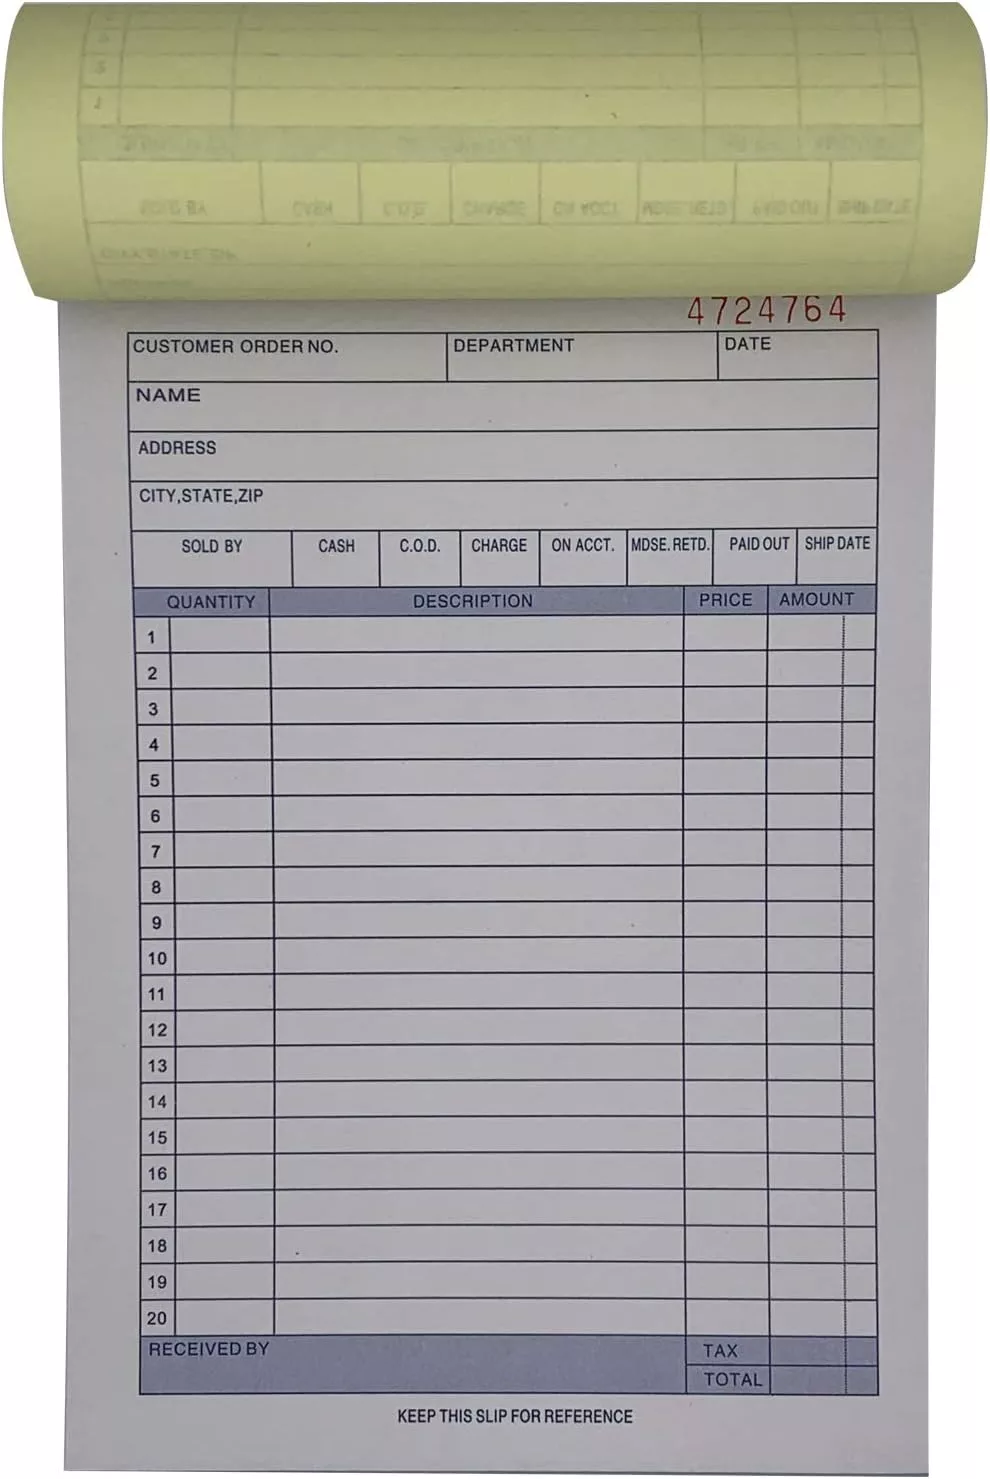 10 Pack Large Sales Order Book Receipt Invoice Duplicate Carbonless 50 Sets 5.9/16″ X 8.7/16″ (10 pck Vertical)